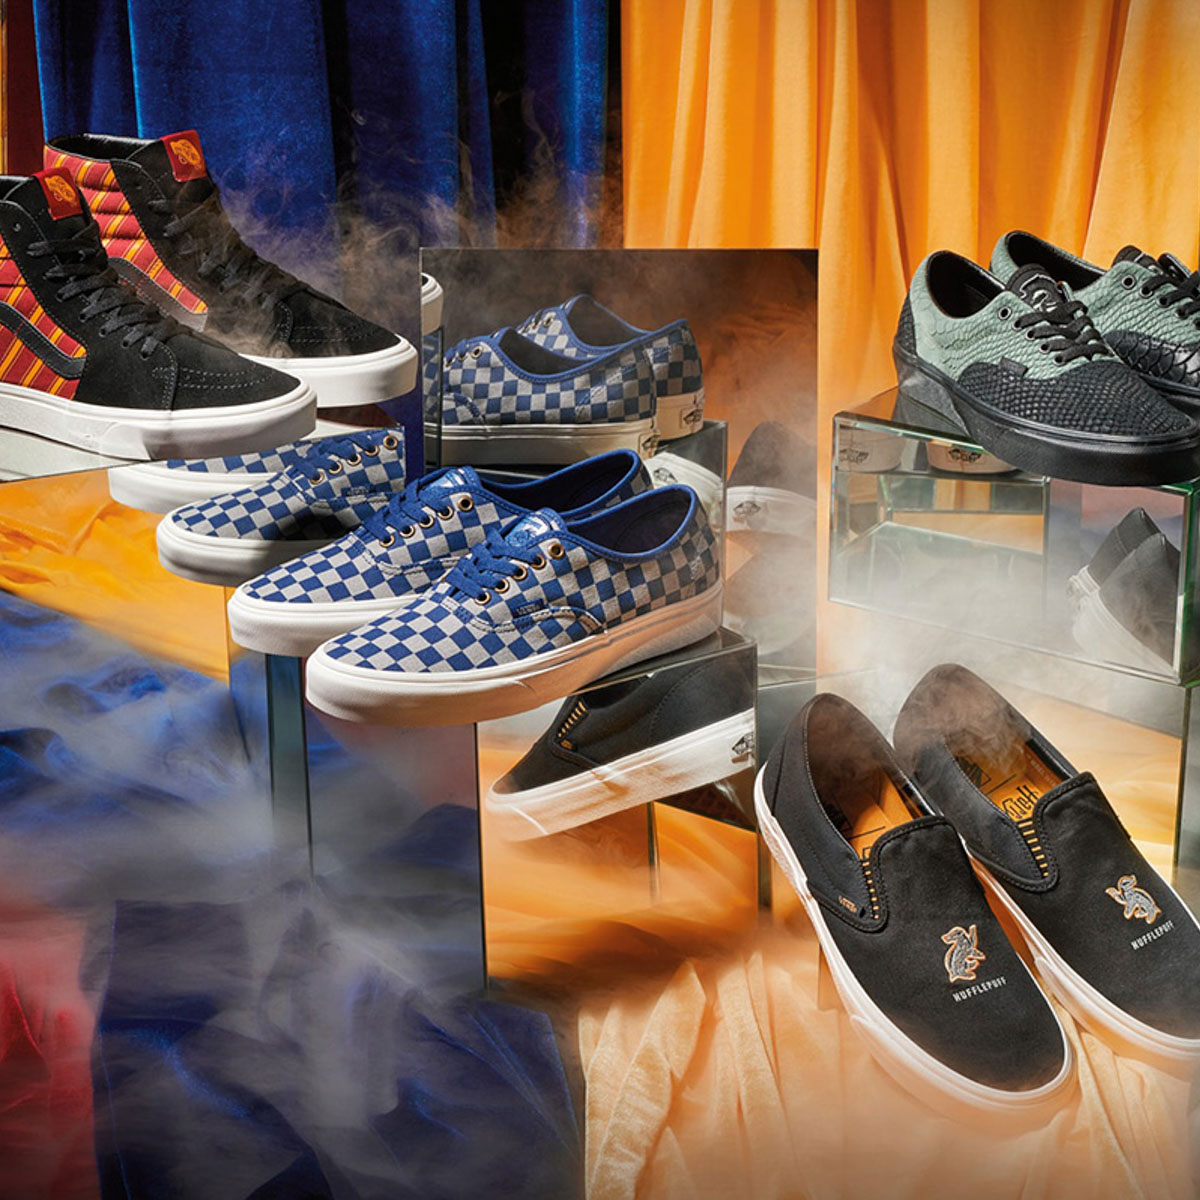 Harry Potter Vans  Vans, Vans classic slip on sneaker, Hogwarts crest